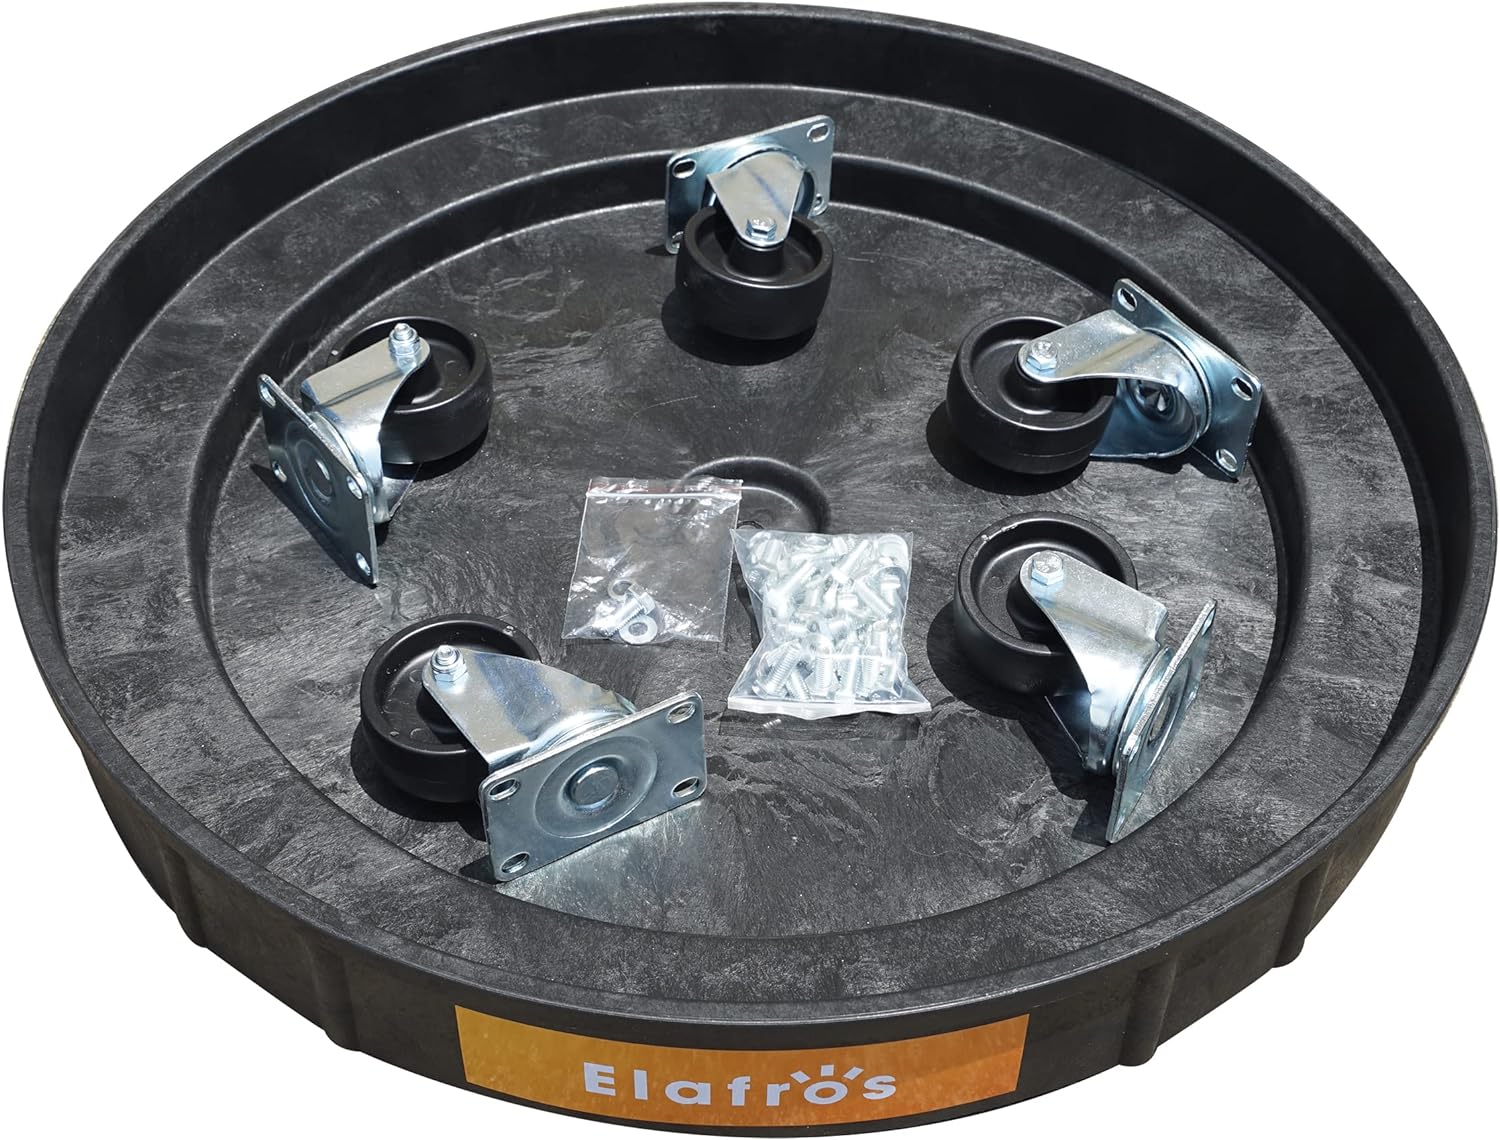 ELAFROS 30 Gallon and 55 Gallon Heavy Duty Plastic Drum Dolly &#226;&#128;&#147; Durable Plastic Drum Cart 900 lb. Capacity